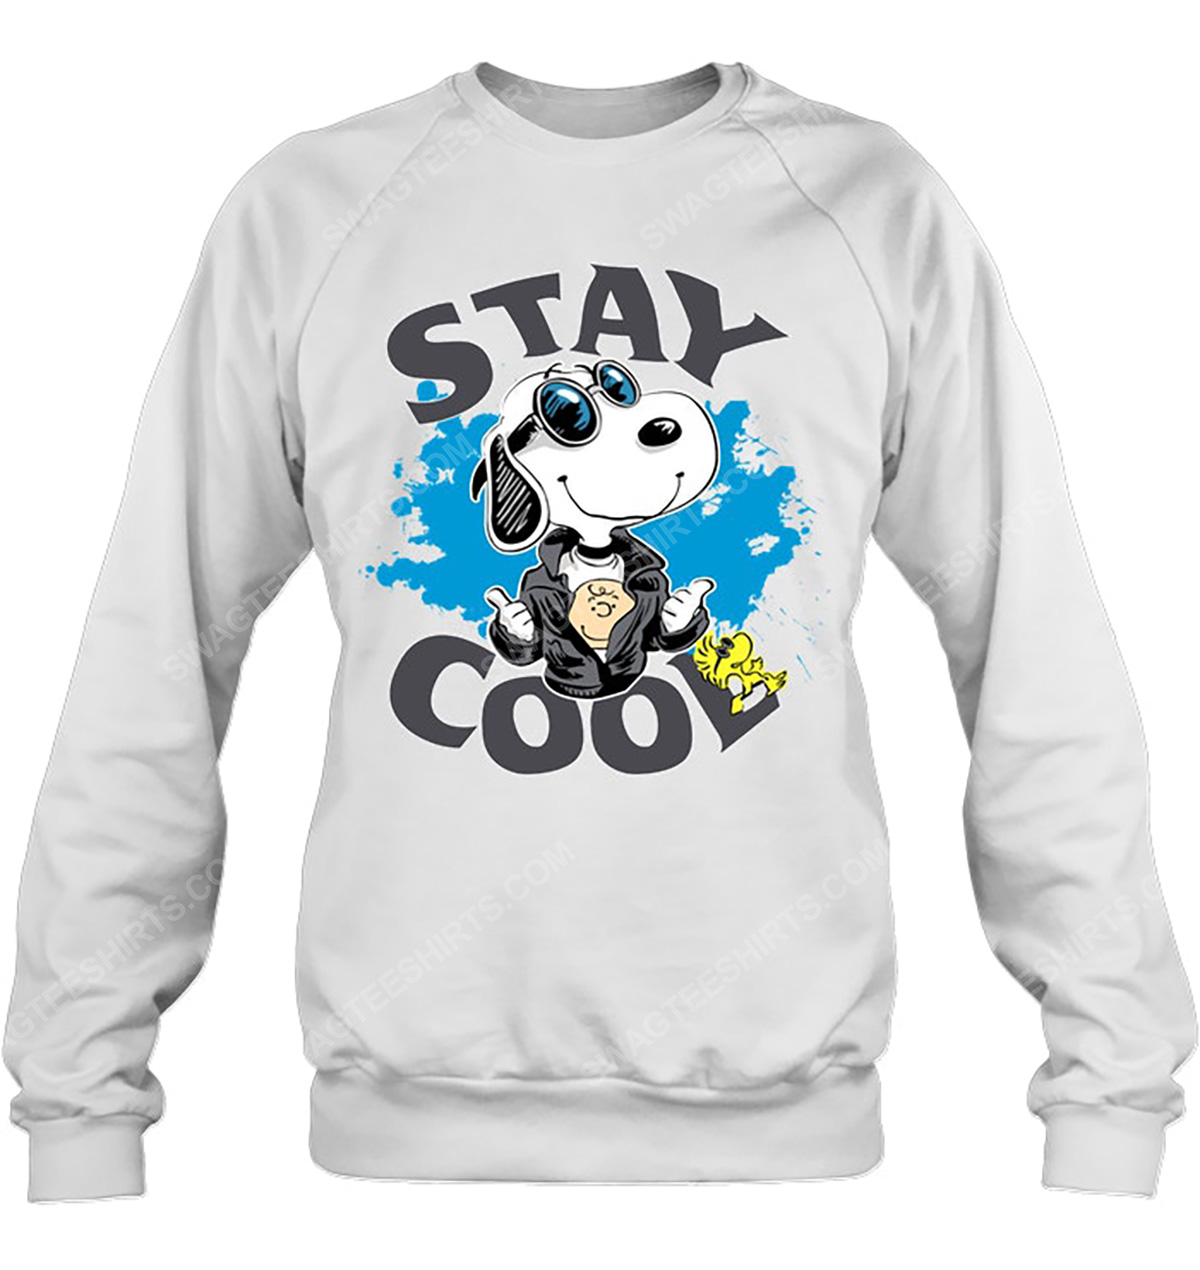 Charlie brown snoopy and woodstock stay cool sweatshirt(1)